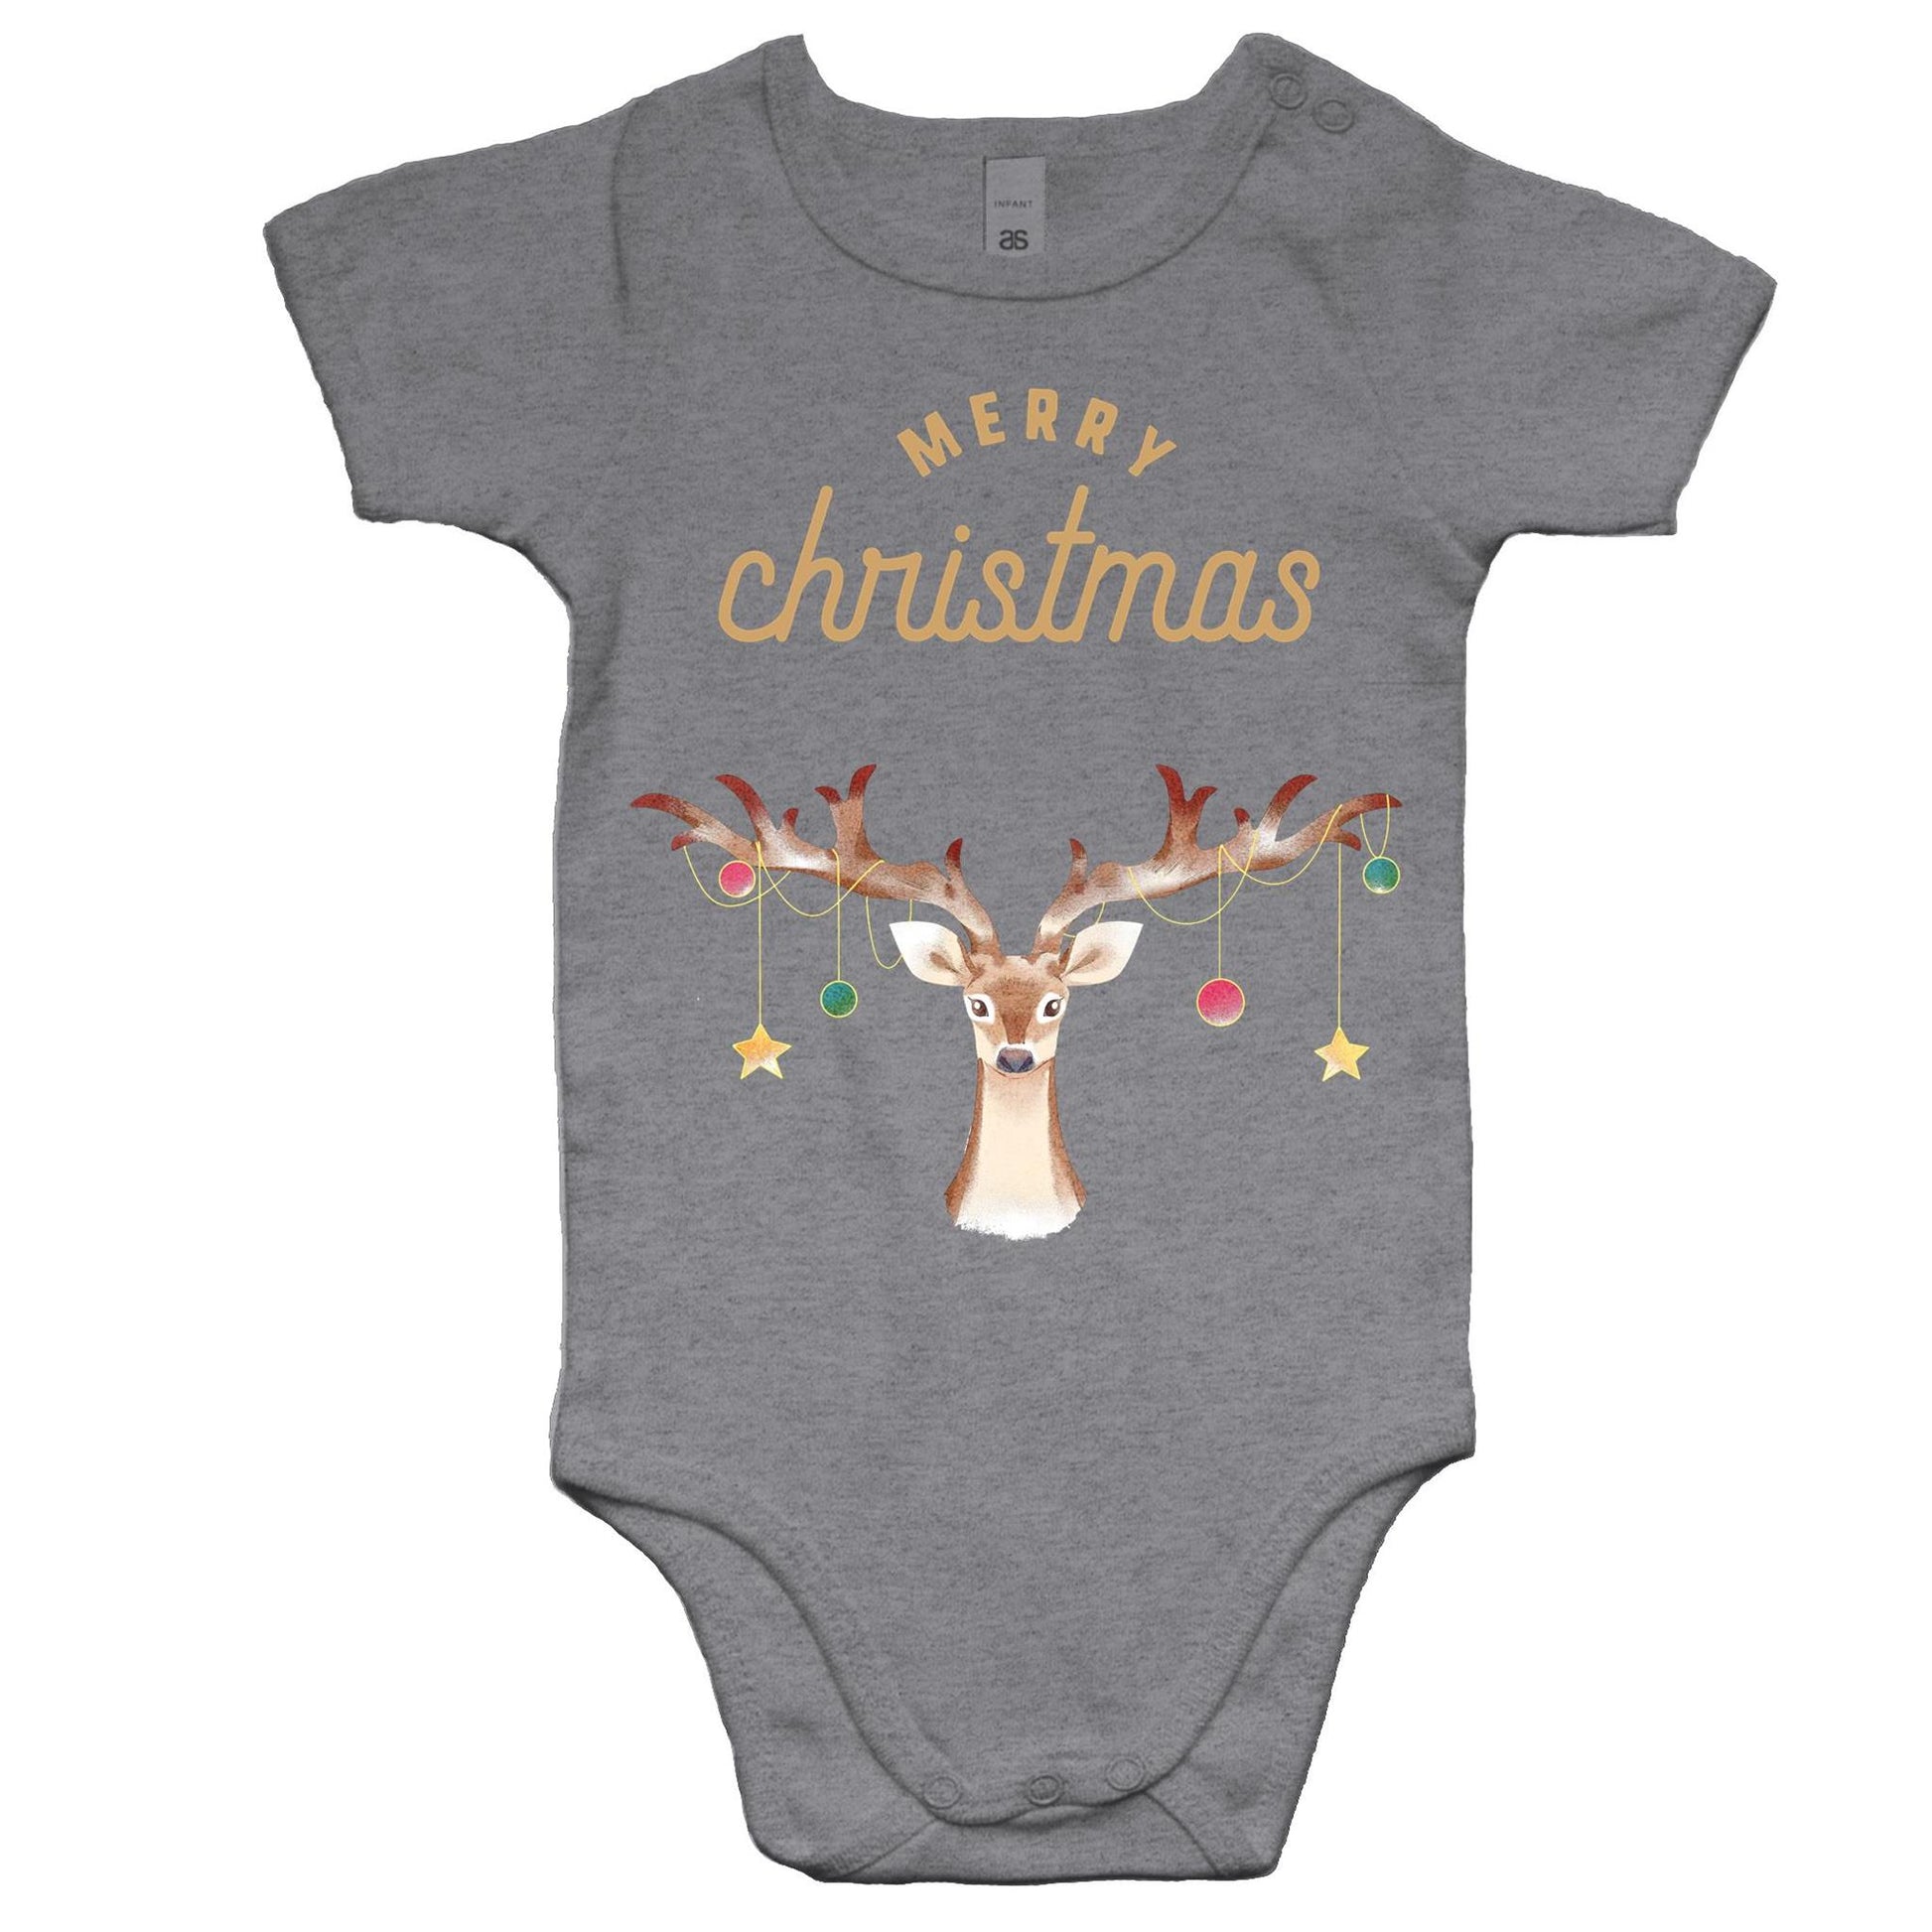 Merry Christmas Reindeer - Baby Bodysuit Grey Marle Christmas Baby Bodysuit Merry Christmas